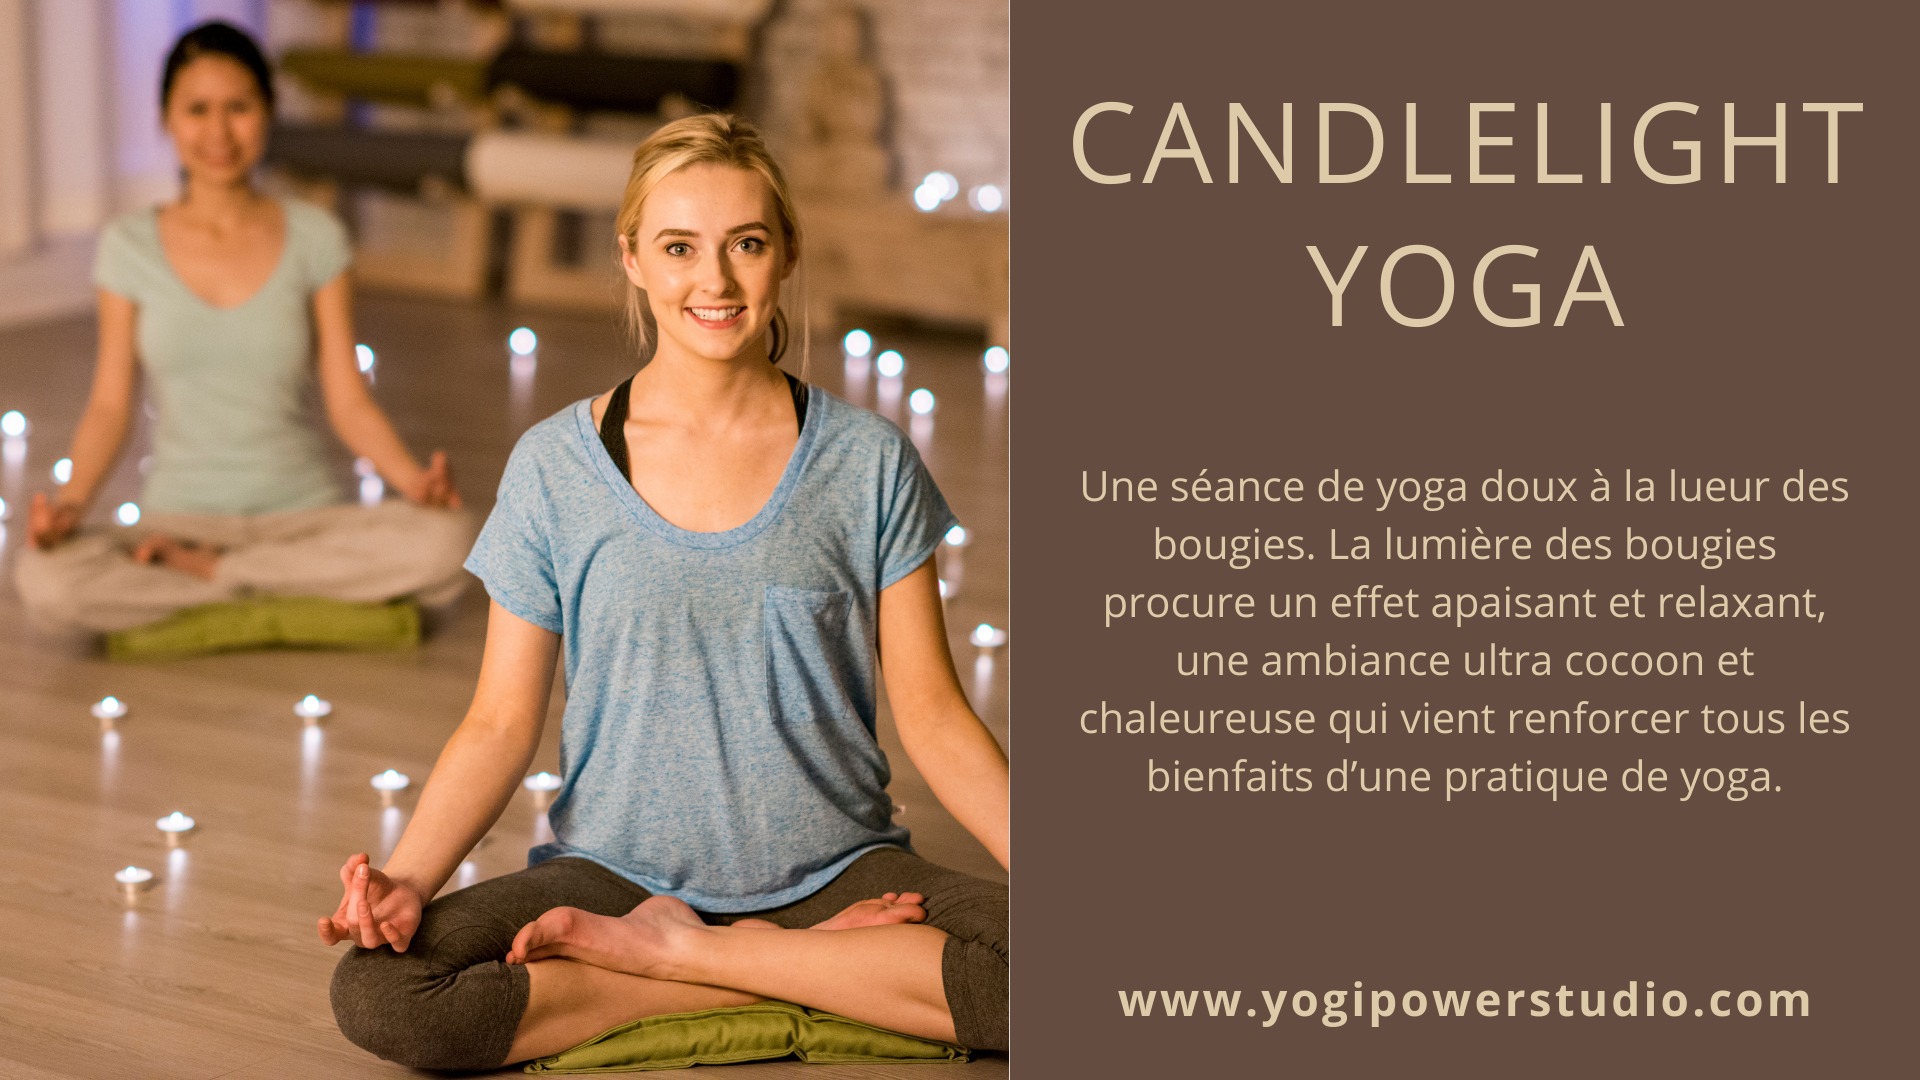 Candlelight Yoga chez Yoi Power Studio à LIEGE